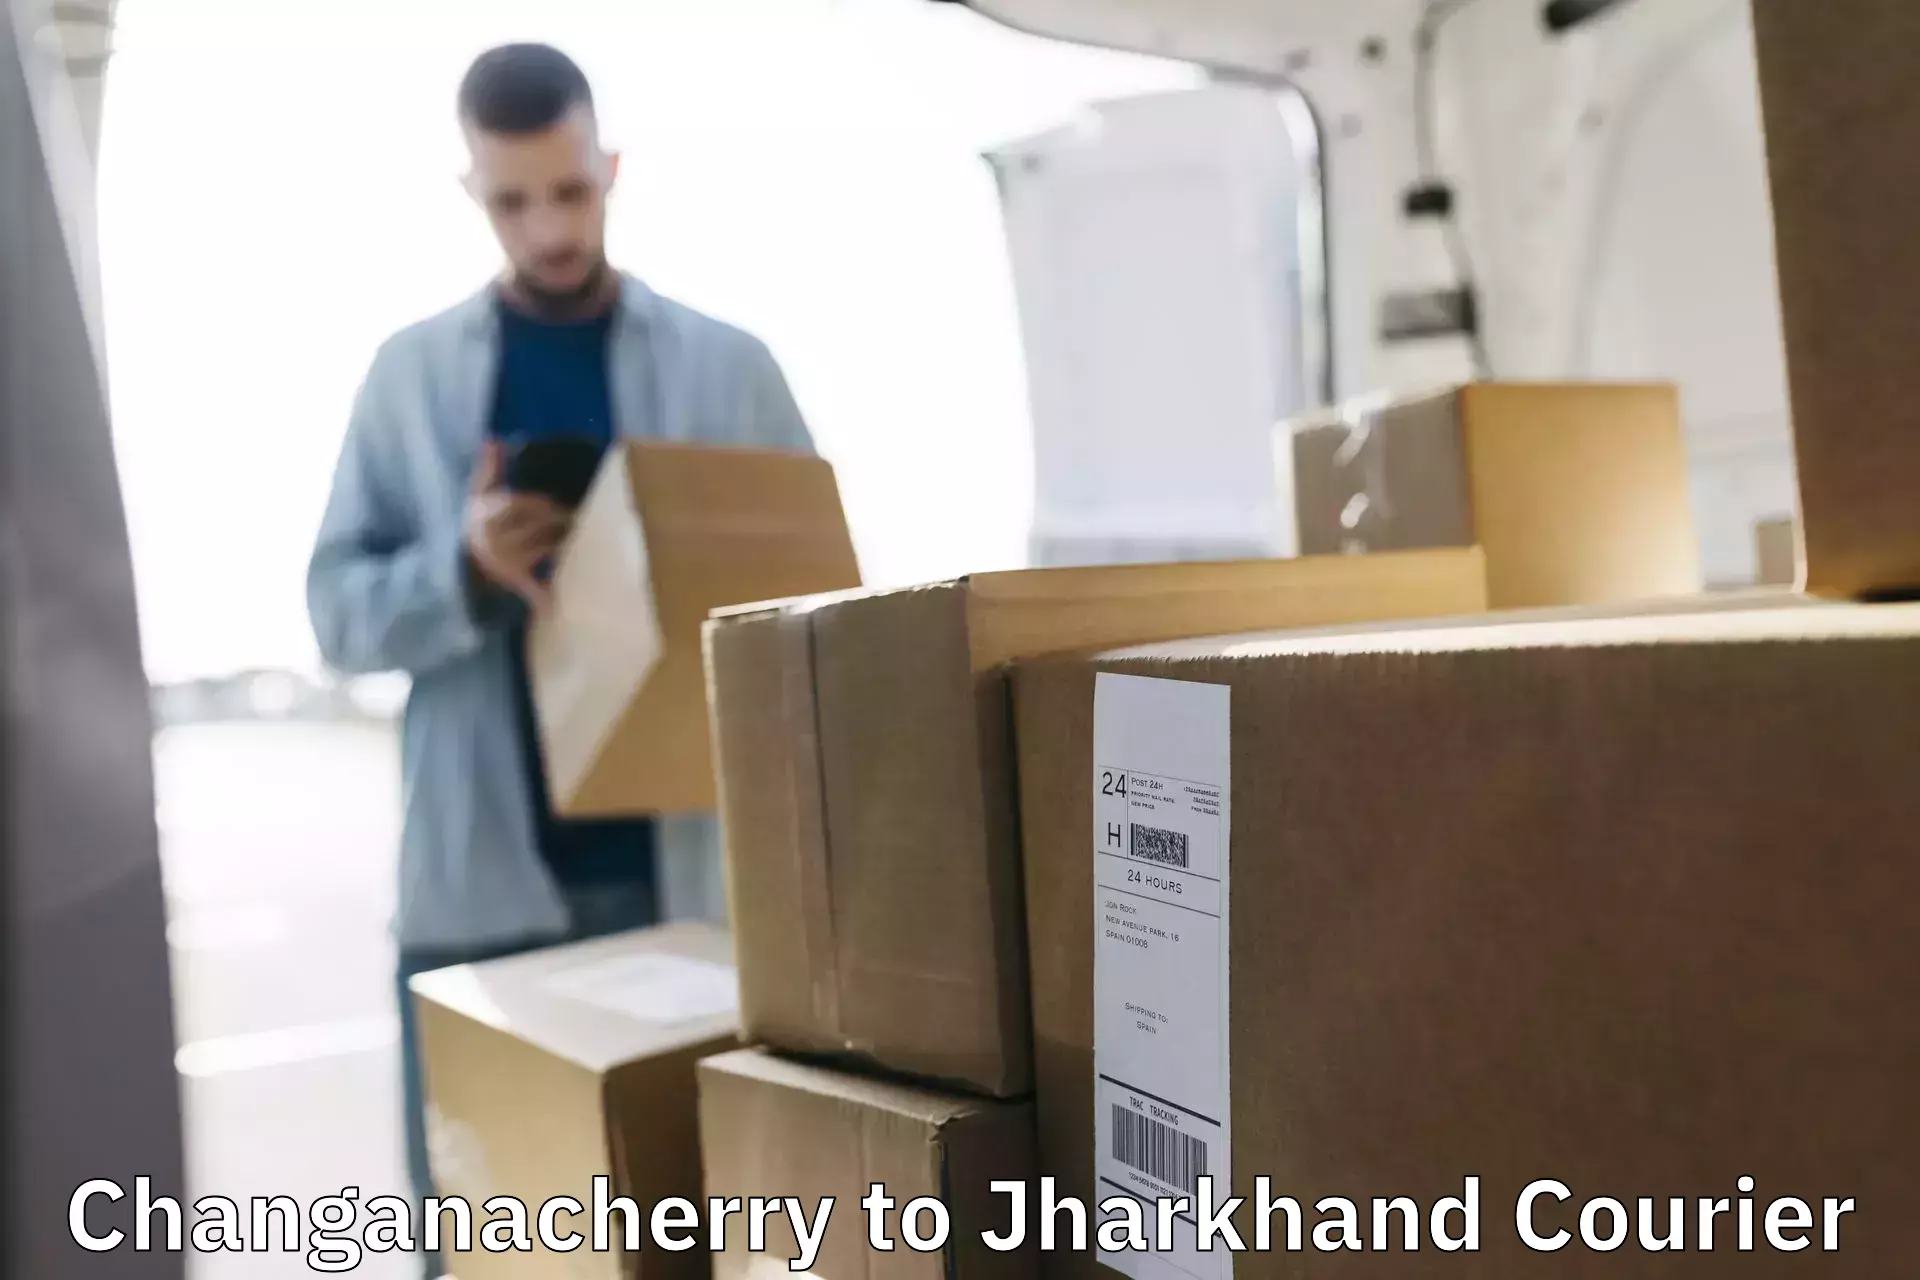 Reliable delivery network Changanacherry to Chhatarpur Palamu